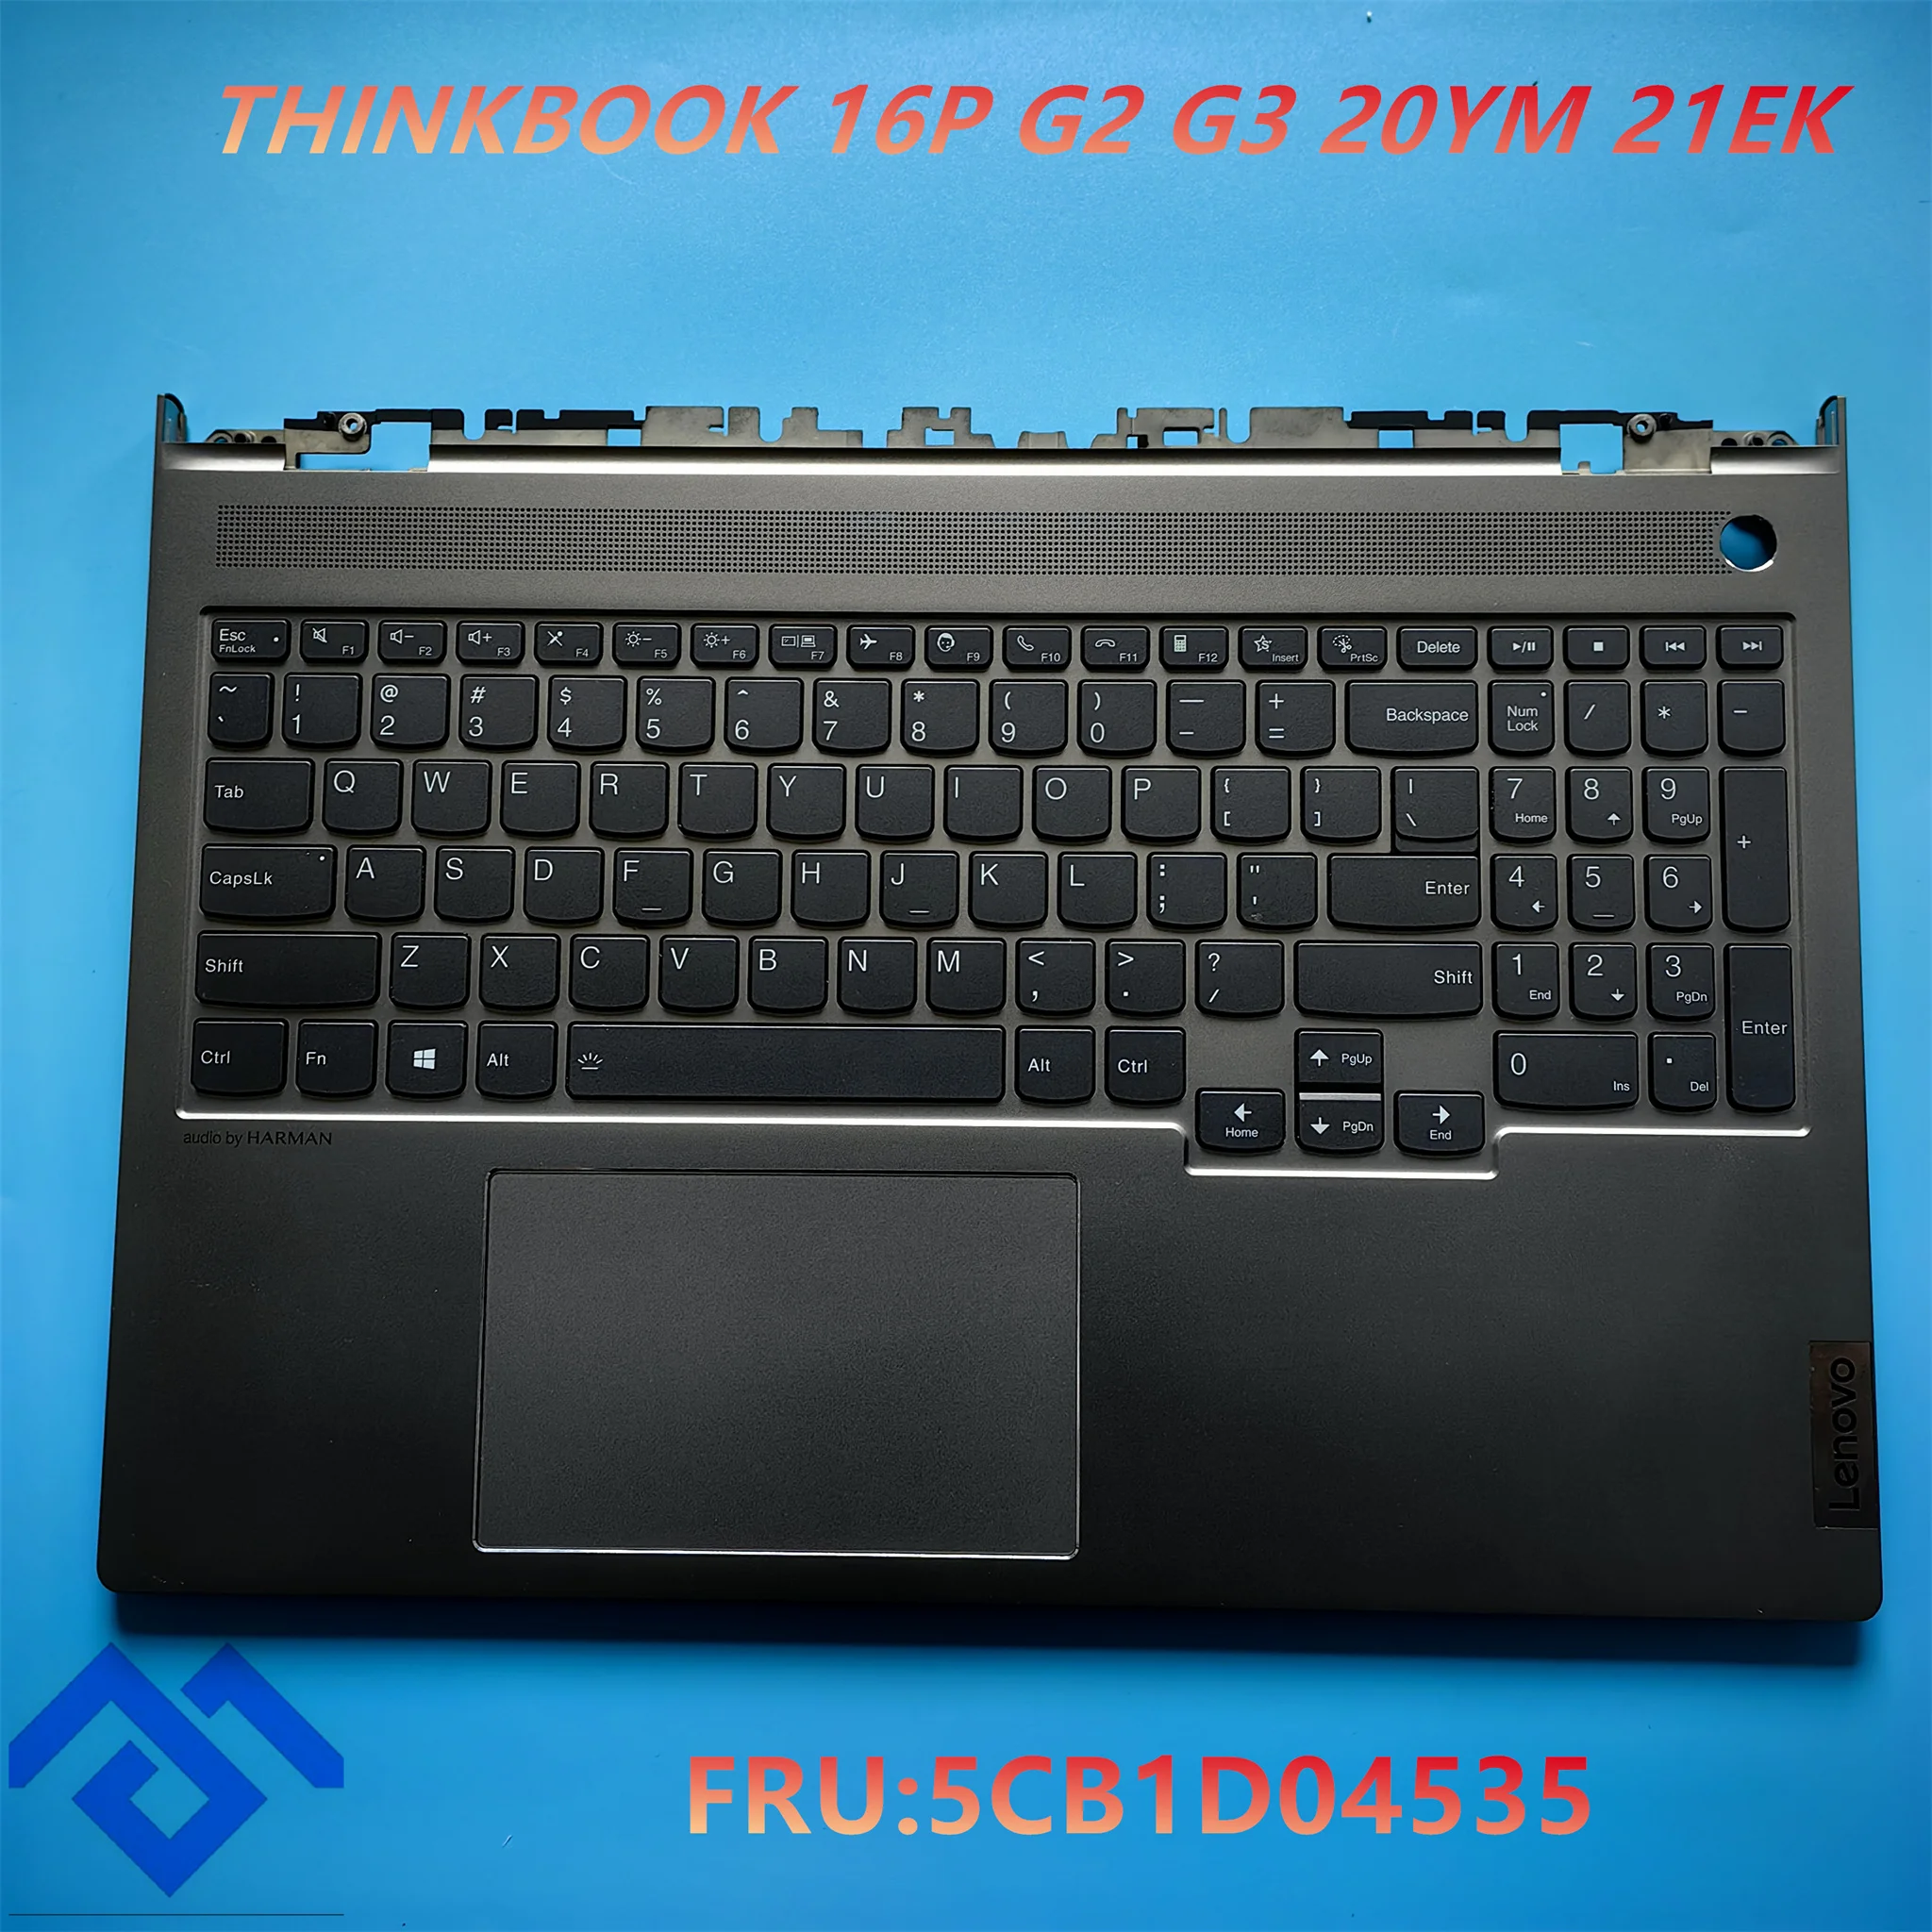 

US English Backlight keyboard palmrest assembly for LENOVO THINKBOOK 16Pro G2 G3 ACH ARH 21EK 21YM With touchpad 5CB1D04535